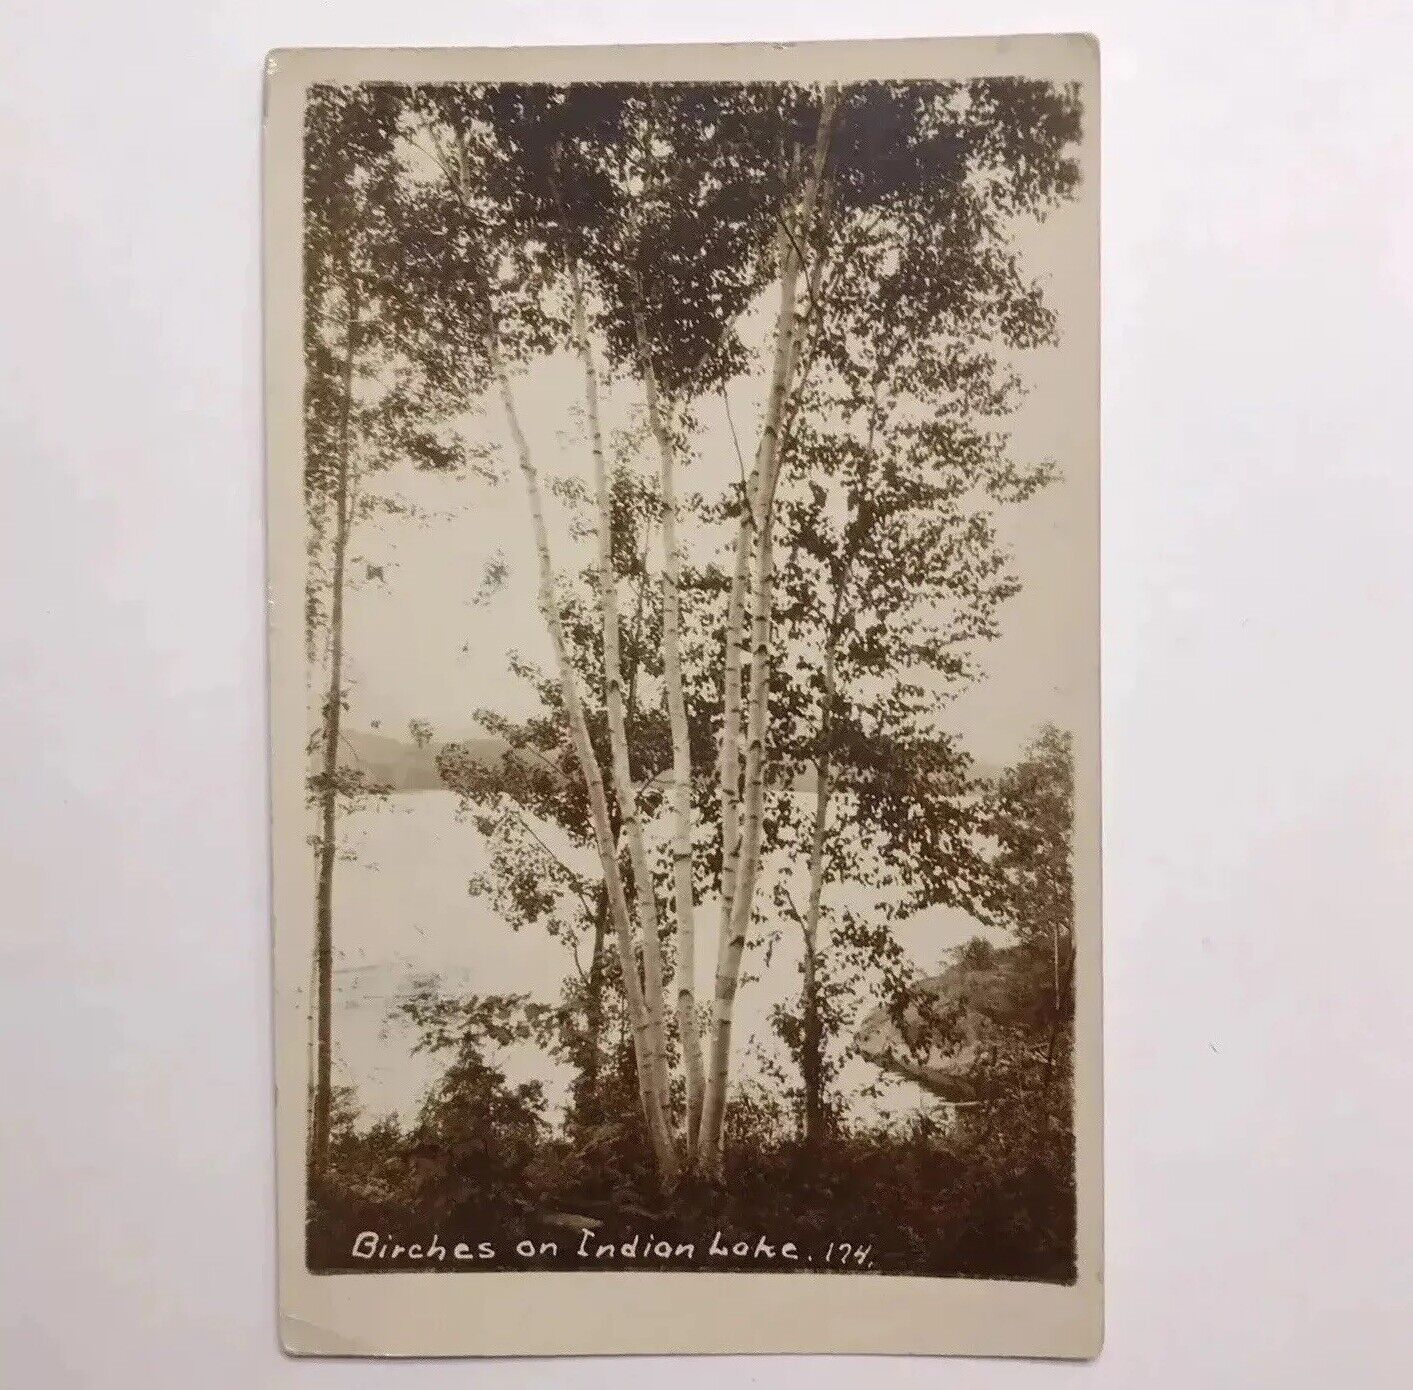 RPPC New York Birches on Indian Lake Postcard Vintage Antique Sabael PM 1916?